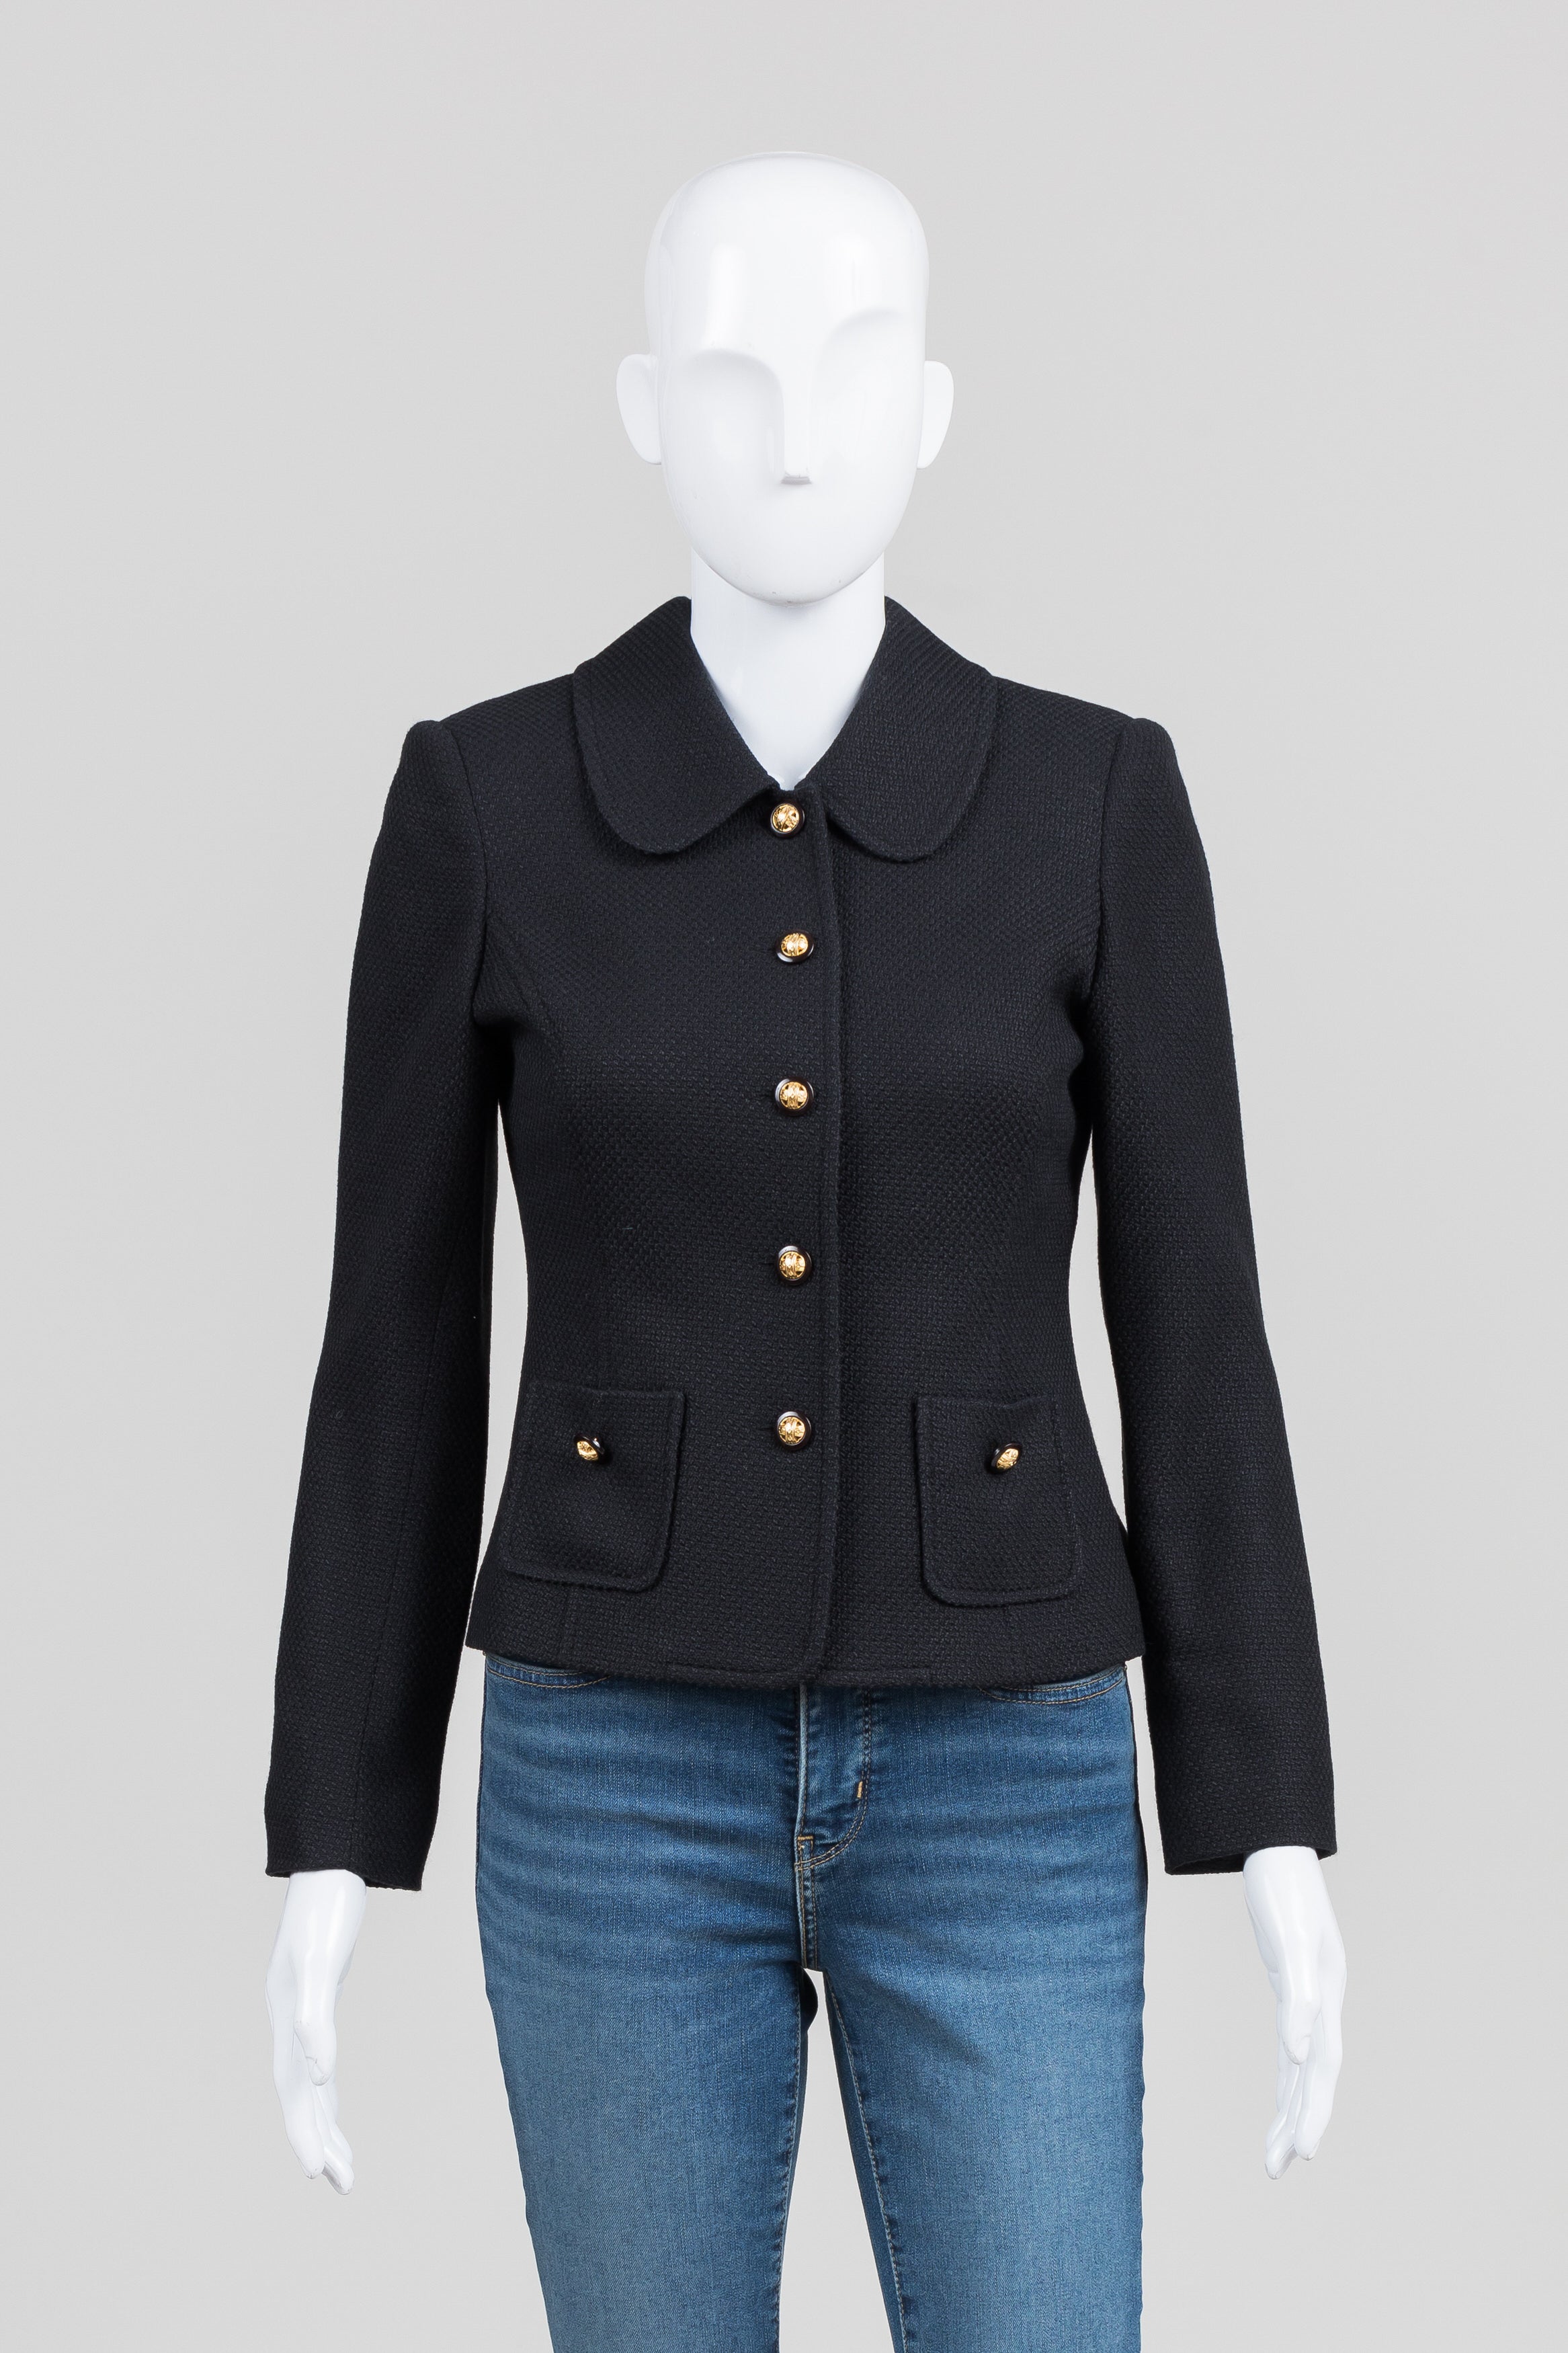 Margareta Black/Navy Dobby Jacket w/ Brass Buttons (4)